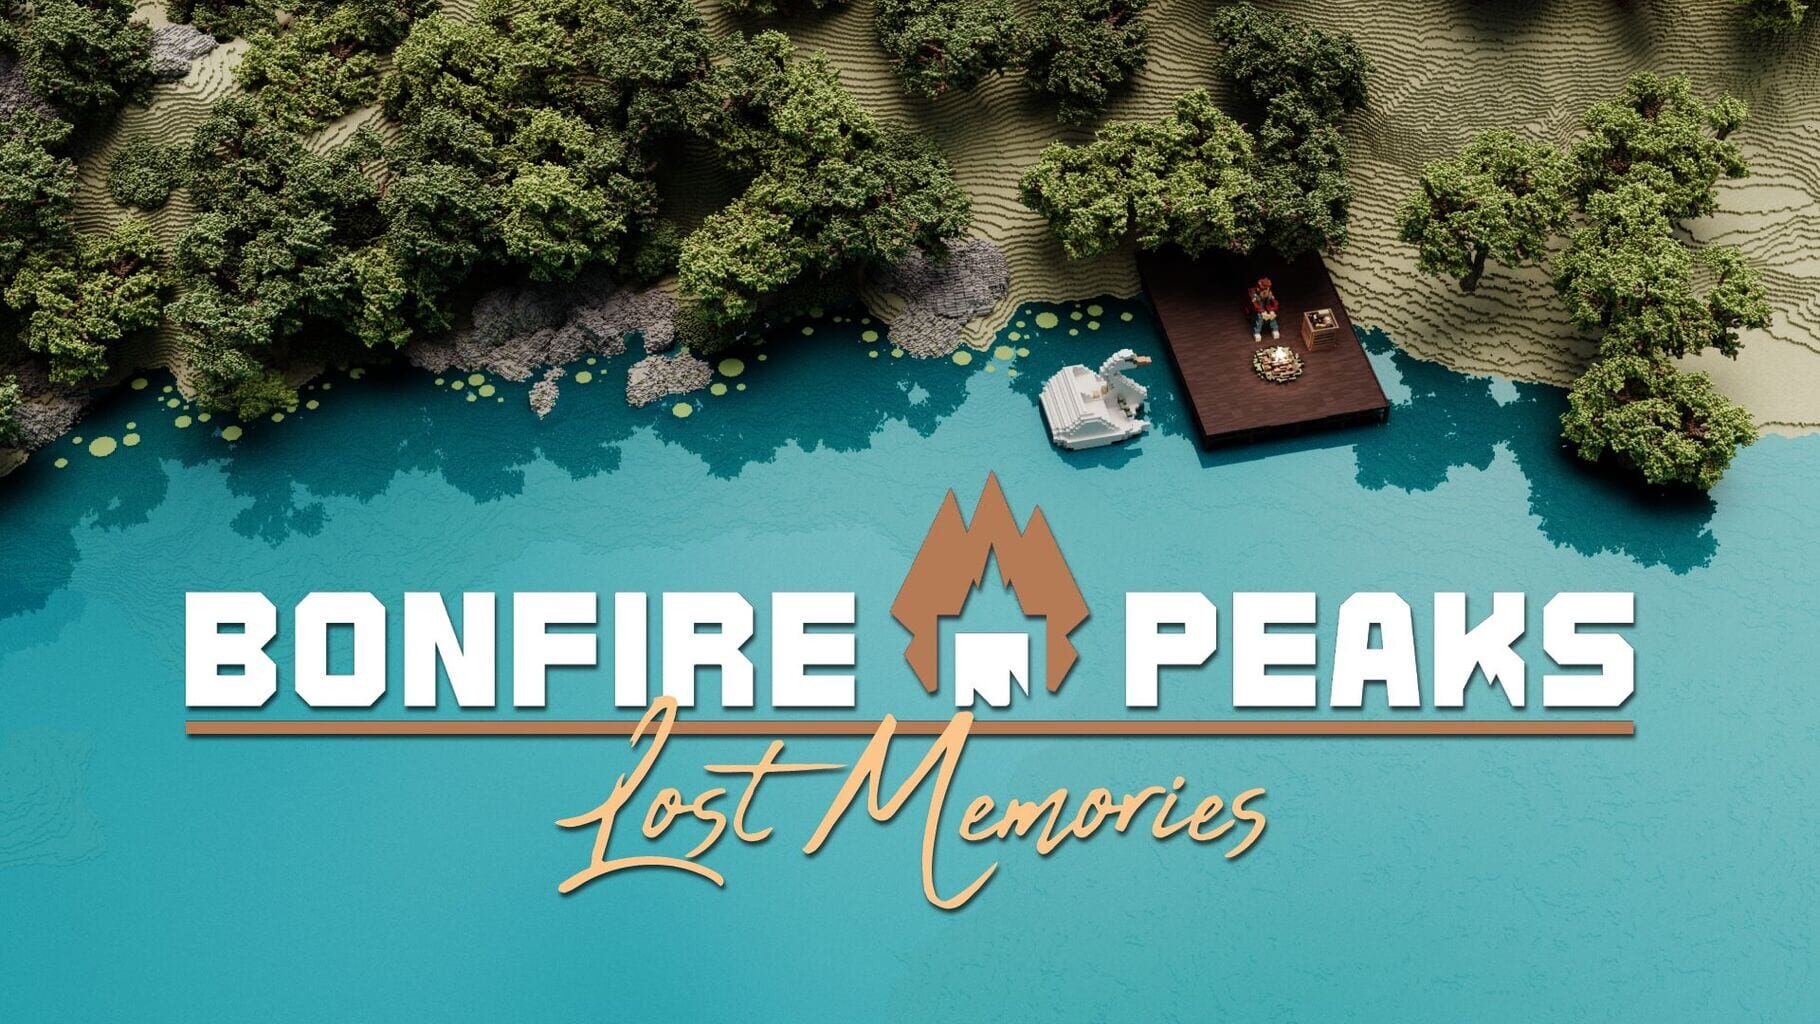 Bonfire Peaks: Lost Memories artwork